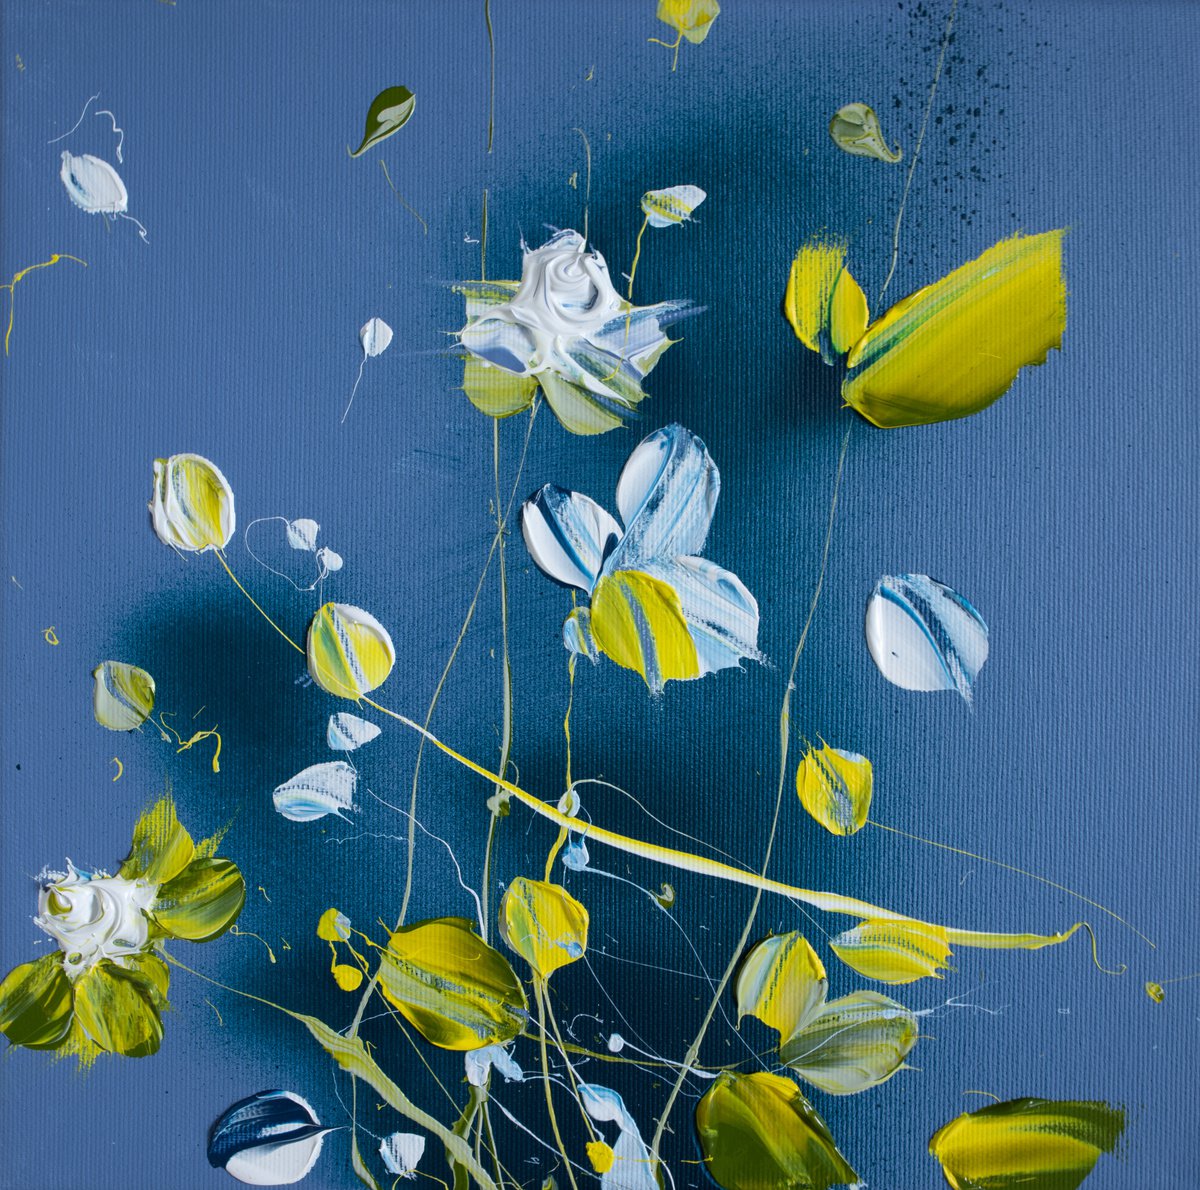 White Roses acrylic square artwork 30x30cm by Anastassia Skopp